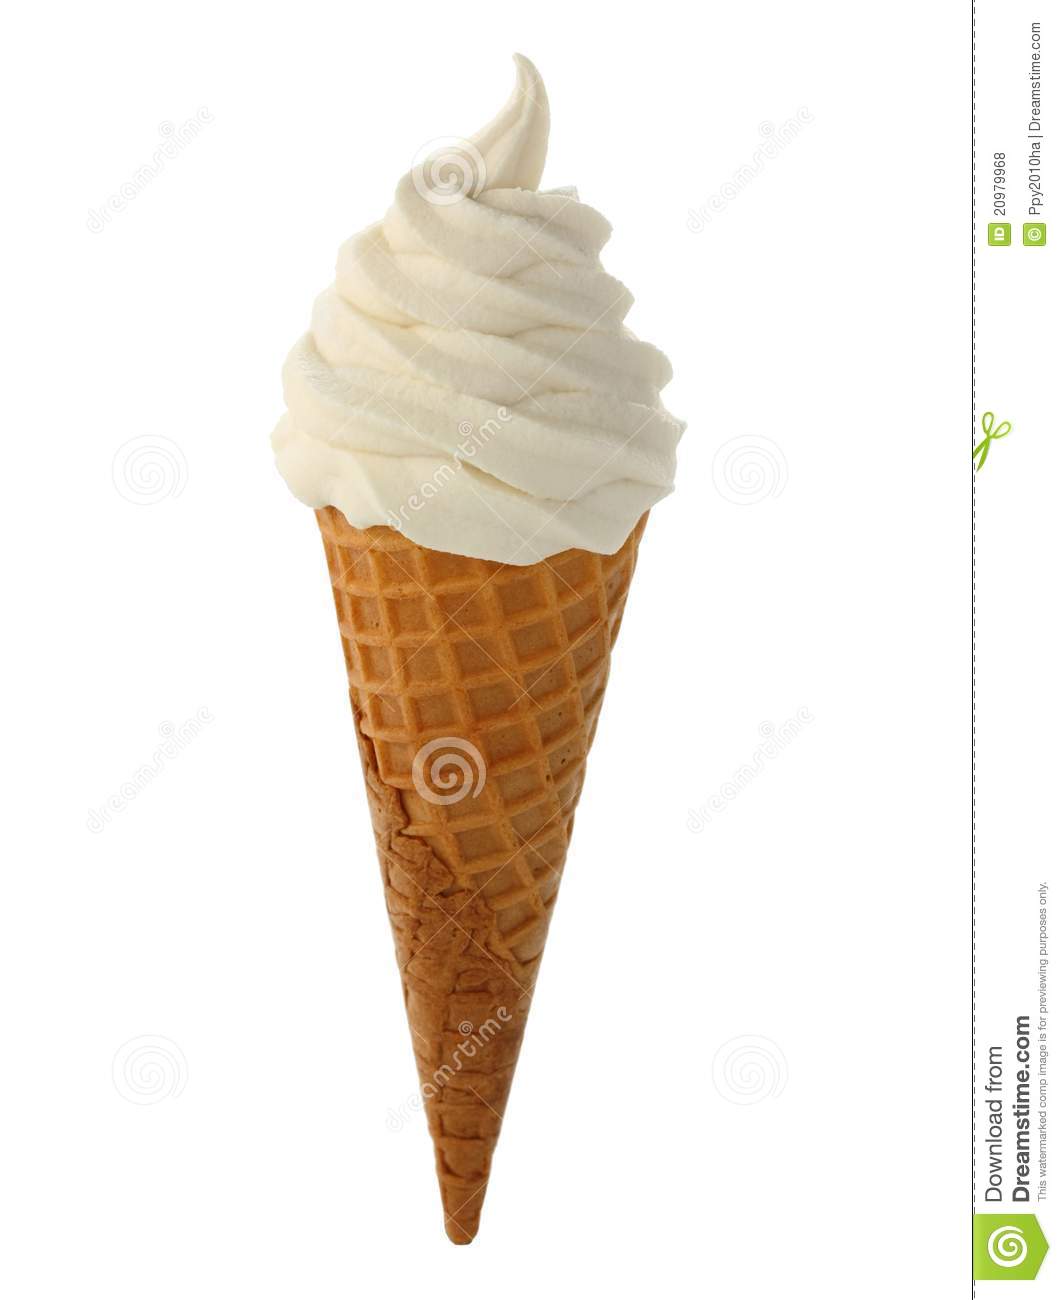 Soft Serve Ice Cream On White Background Royalty Free Stock Photos